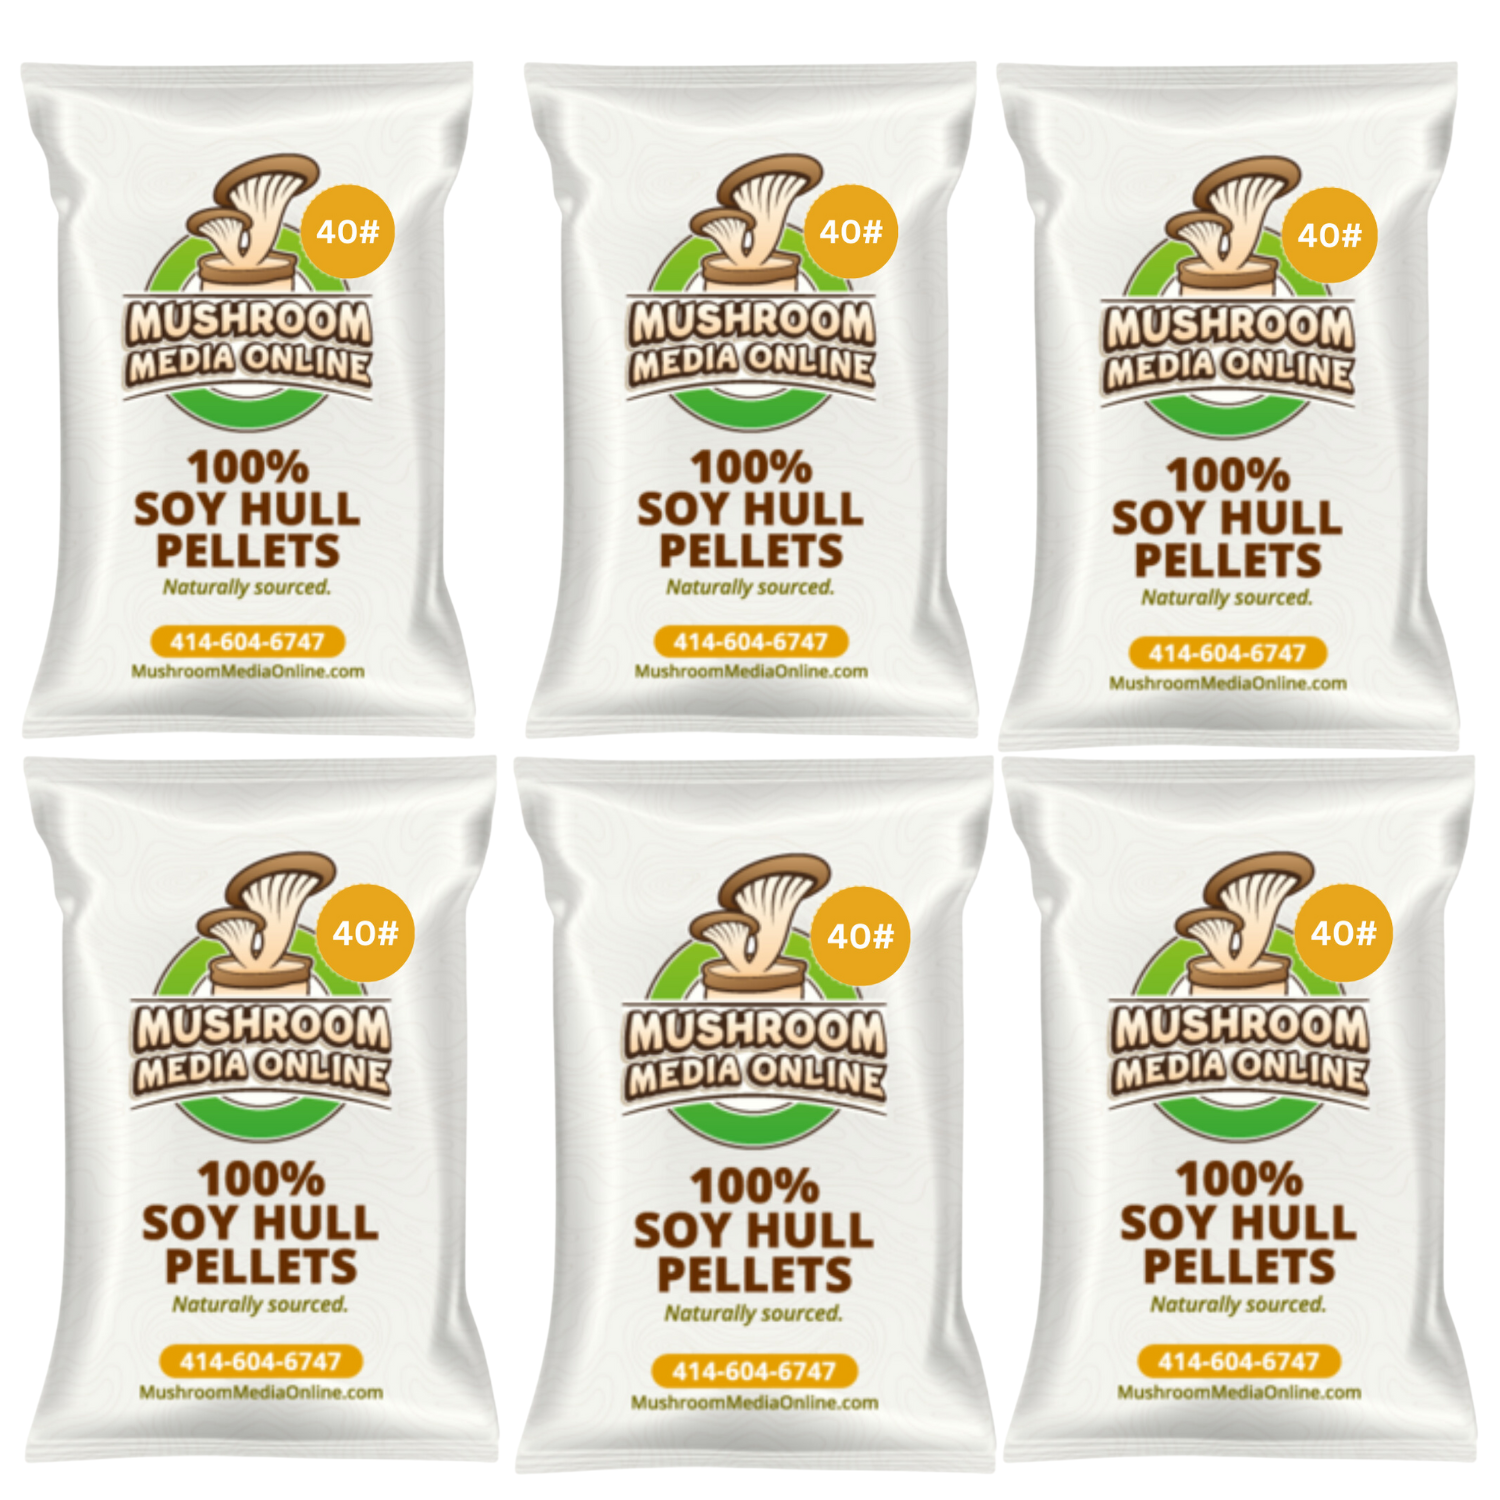 240# (6 x 40#bag) of 100% Soy Hull Mushroom Pellets - Free shipping